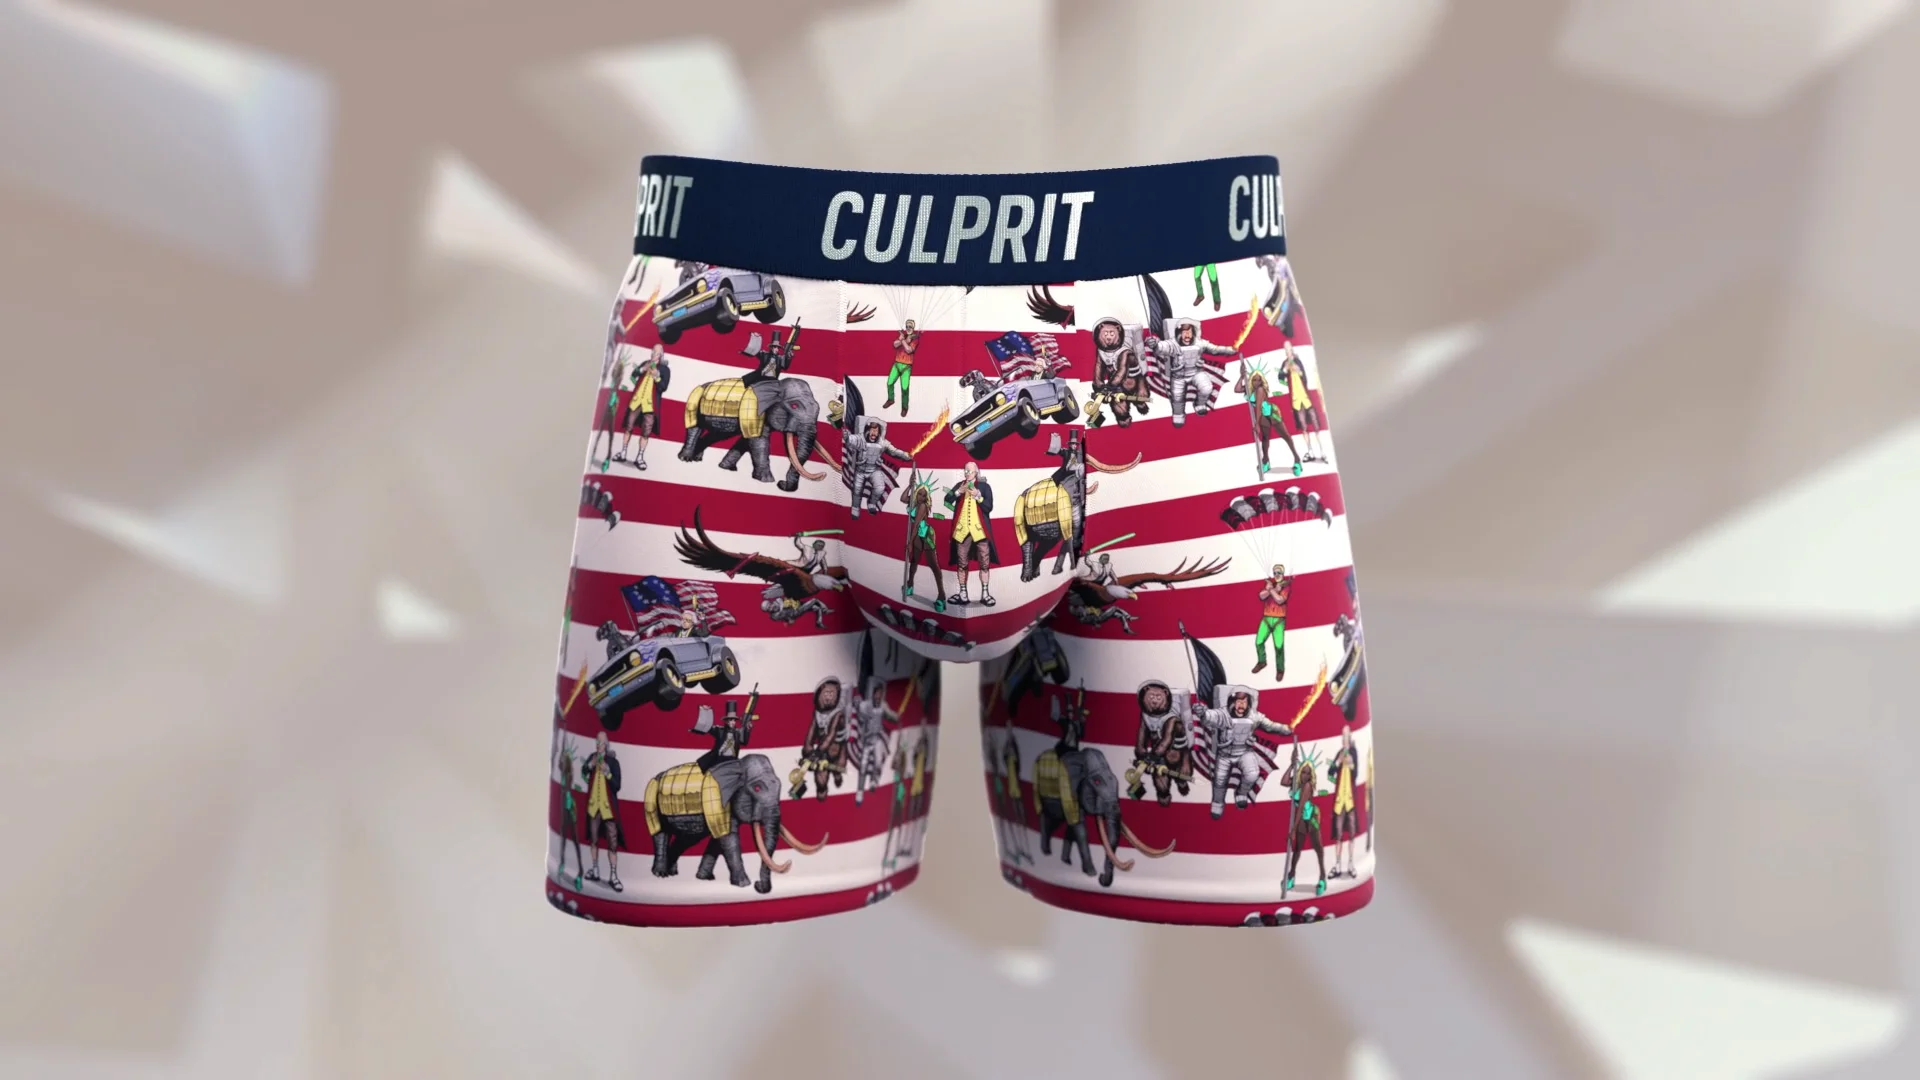 For Culprit underwear : r/JuliMery